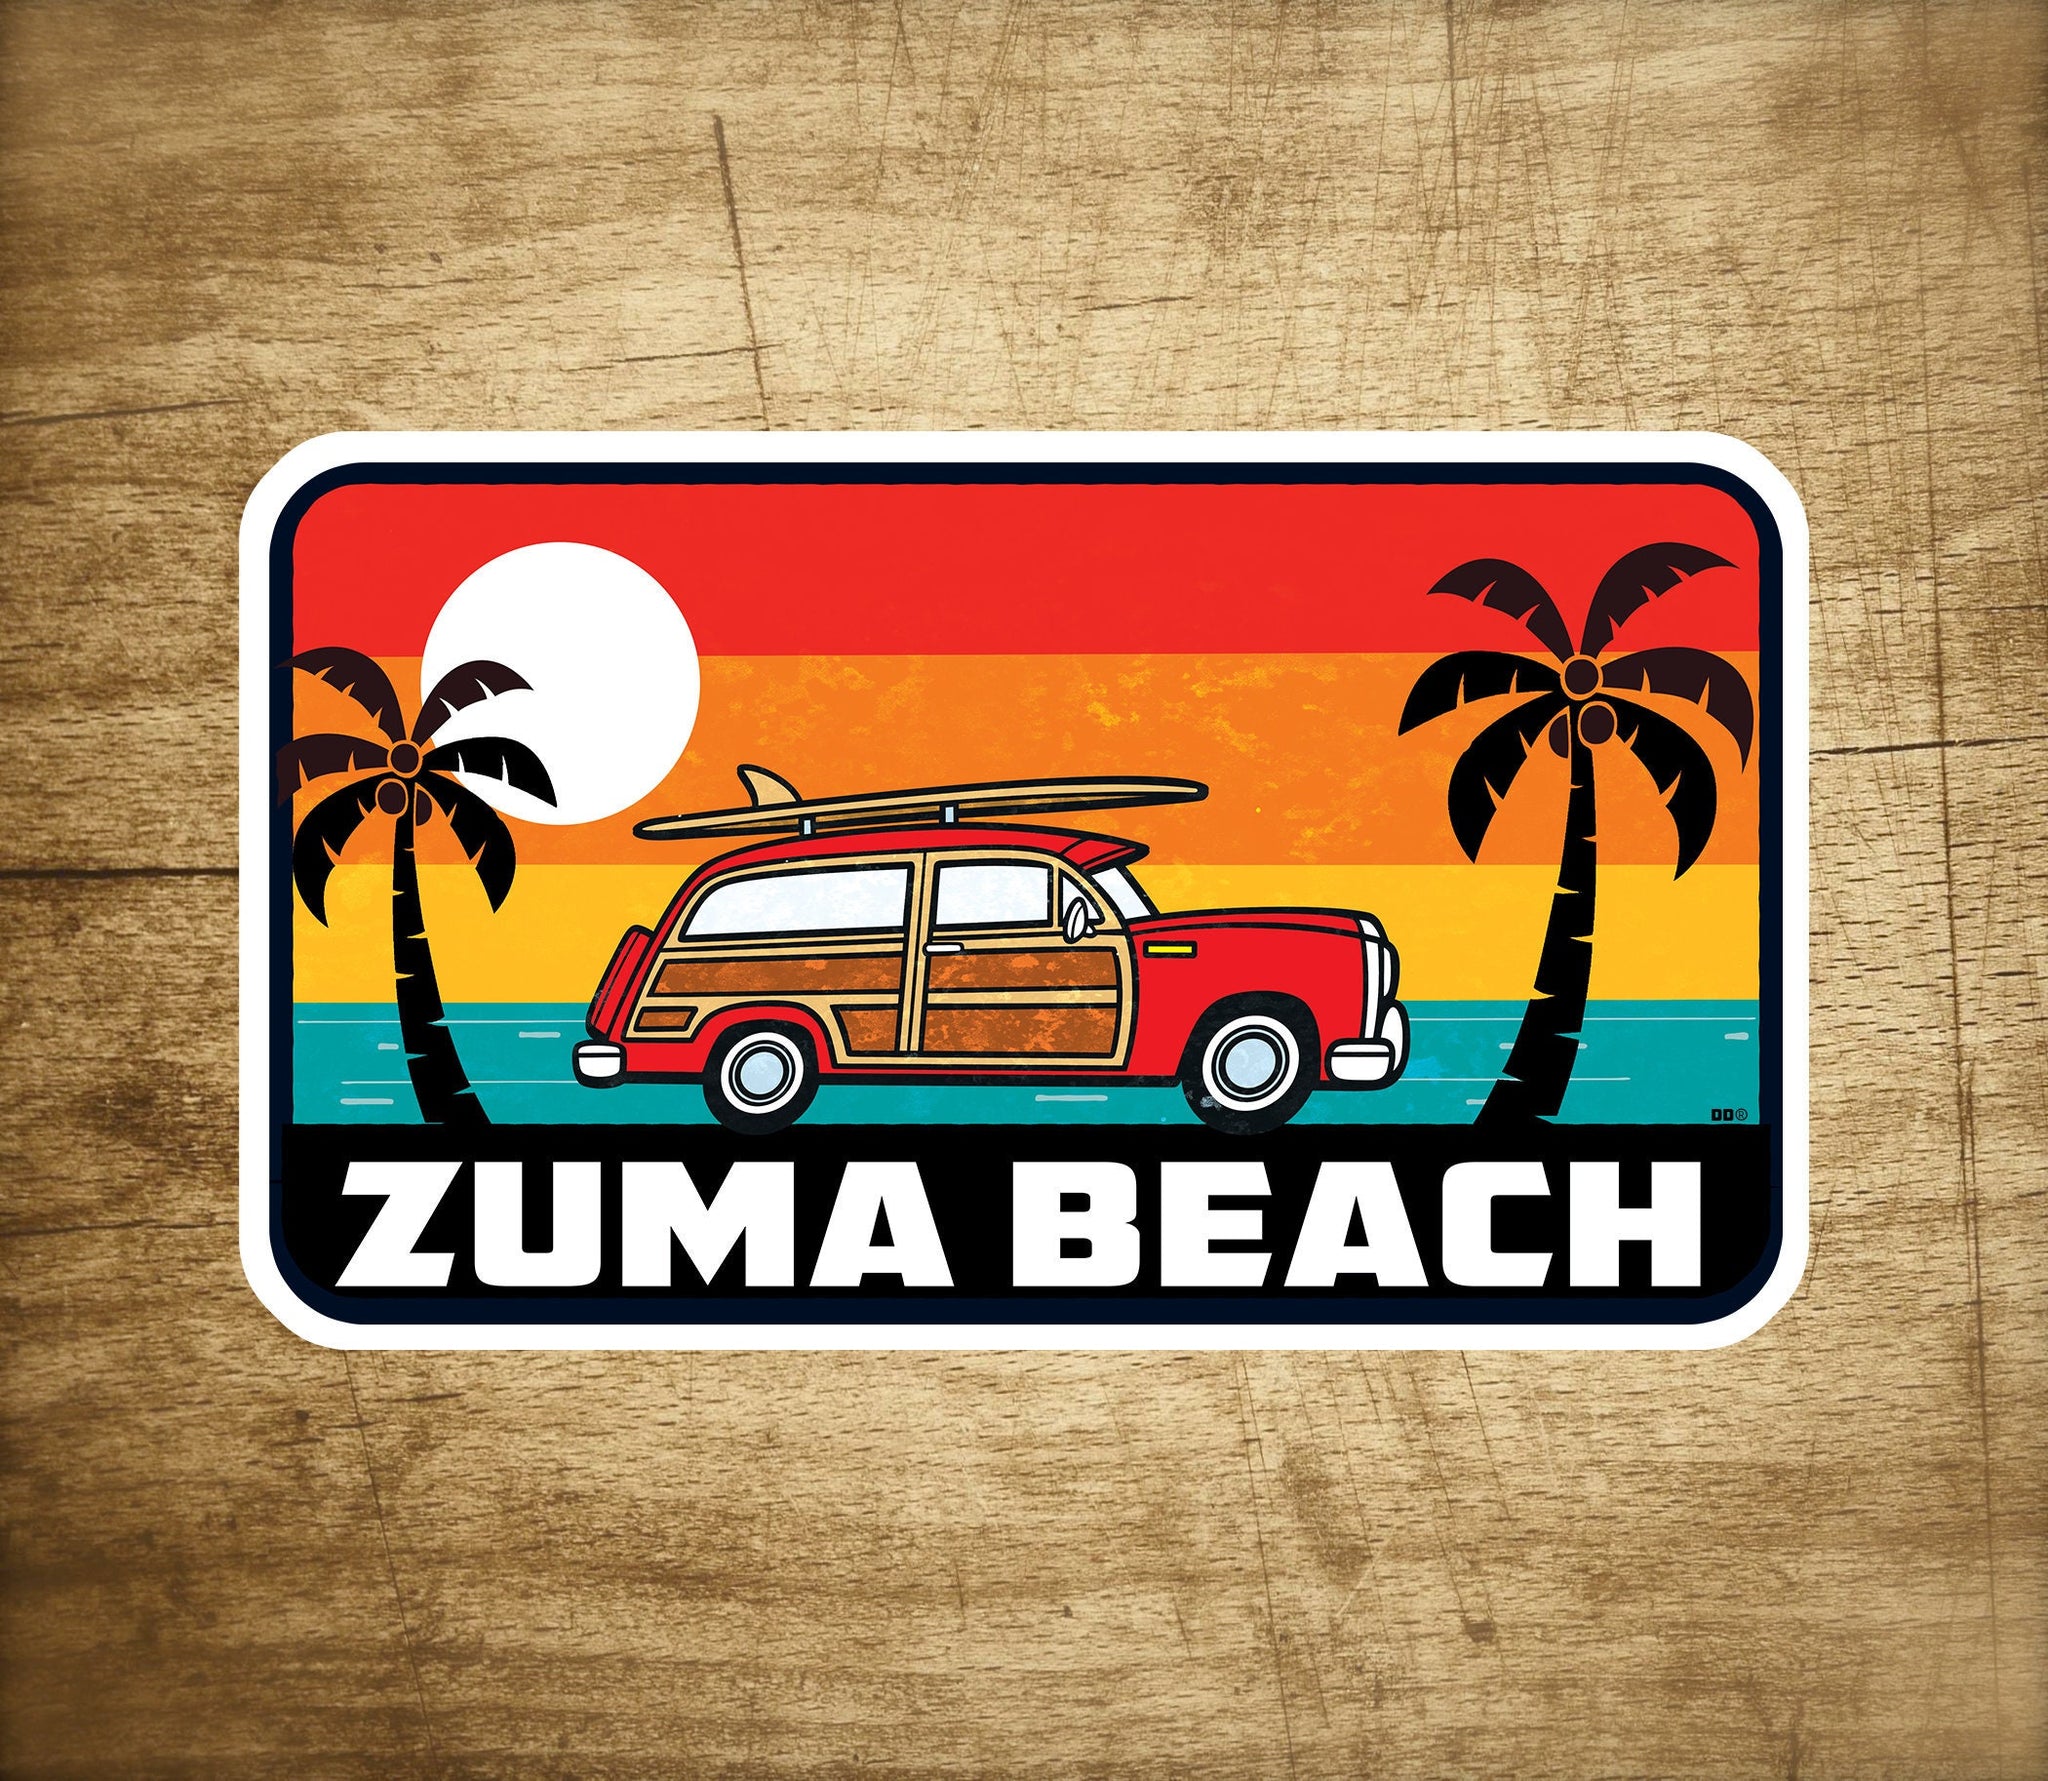 Zuma Beach California Decal Sticker 3.75" X 2.25" Surf Malibu Surfing